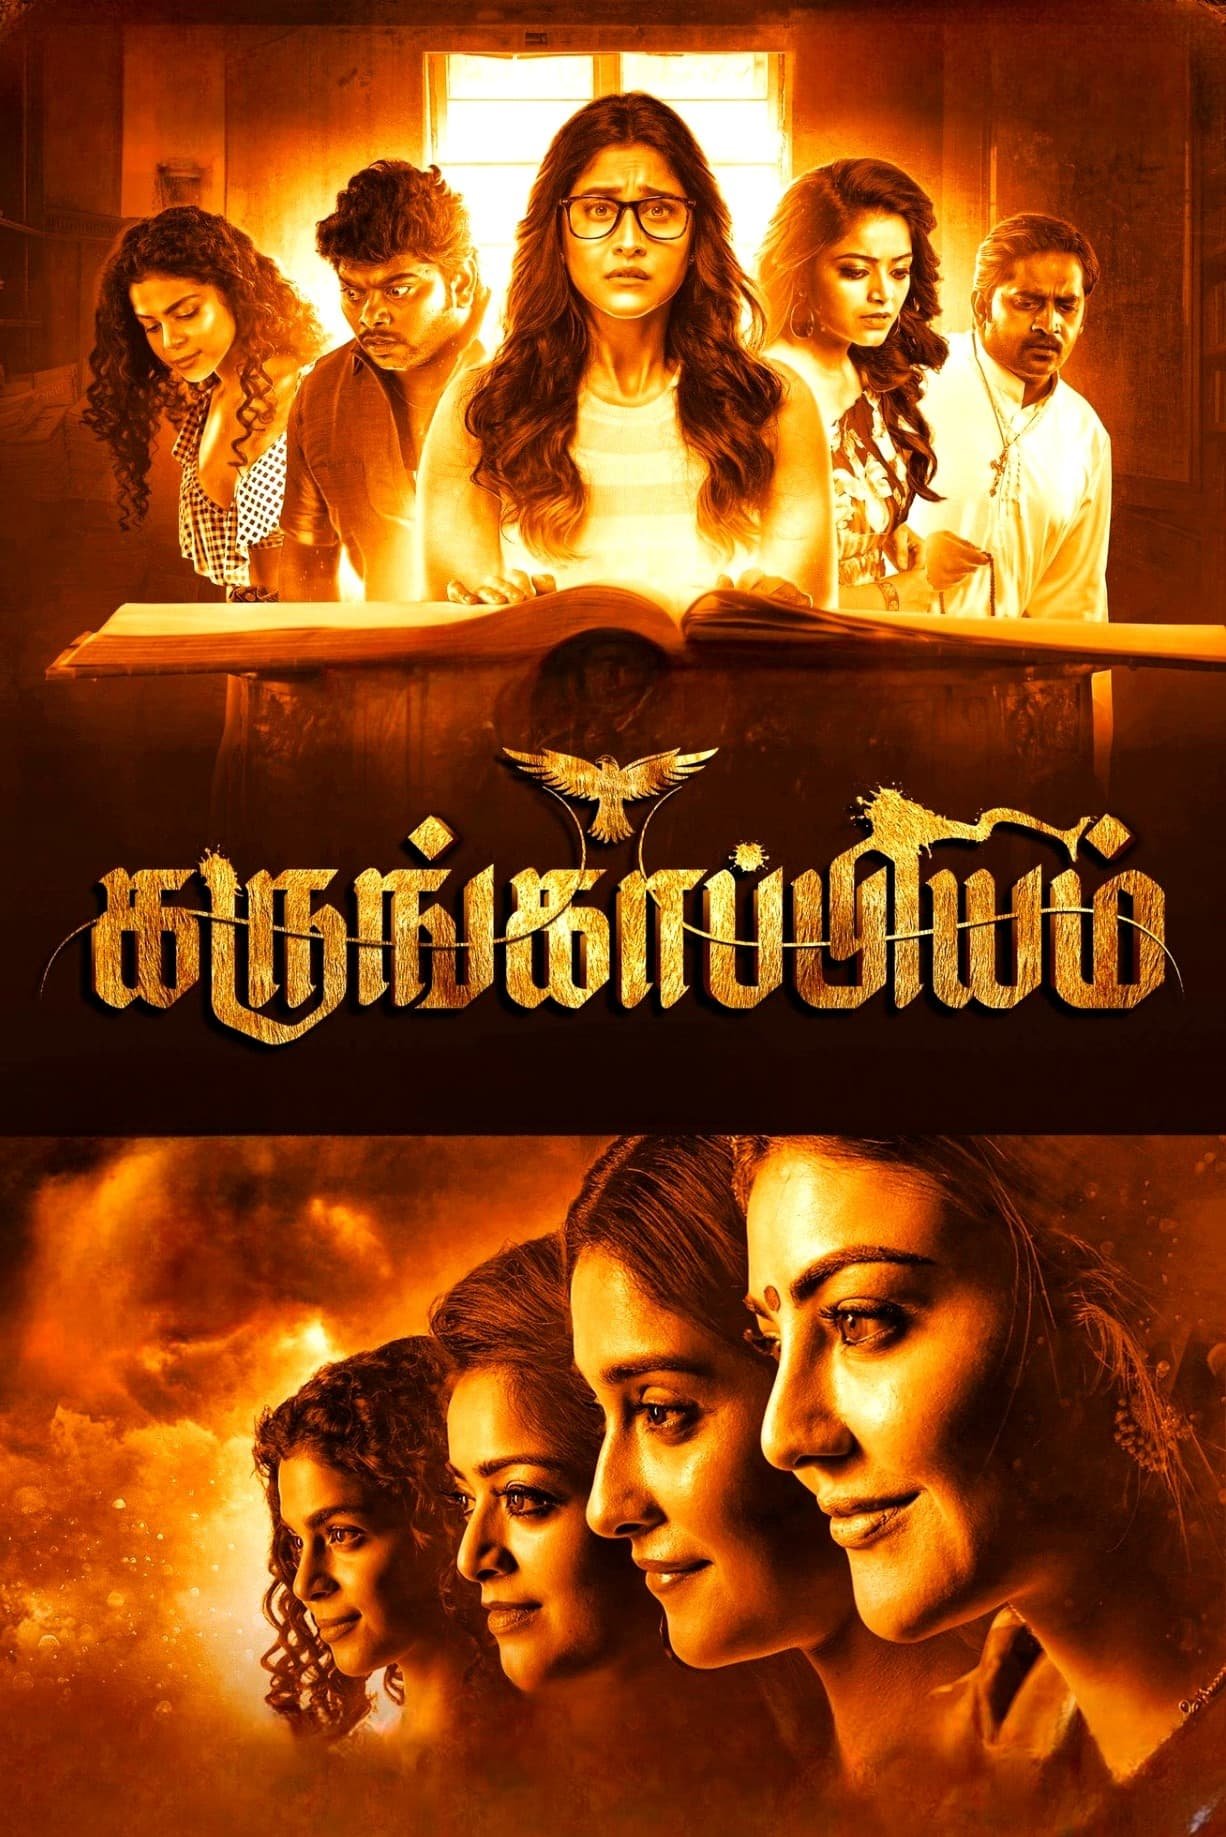 Poster for the movie "Karungaapiyam"